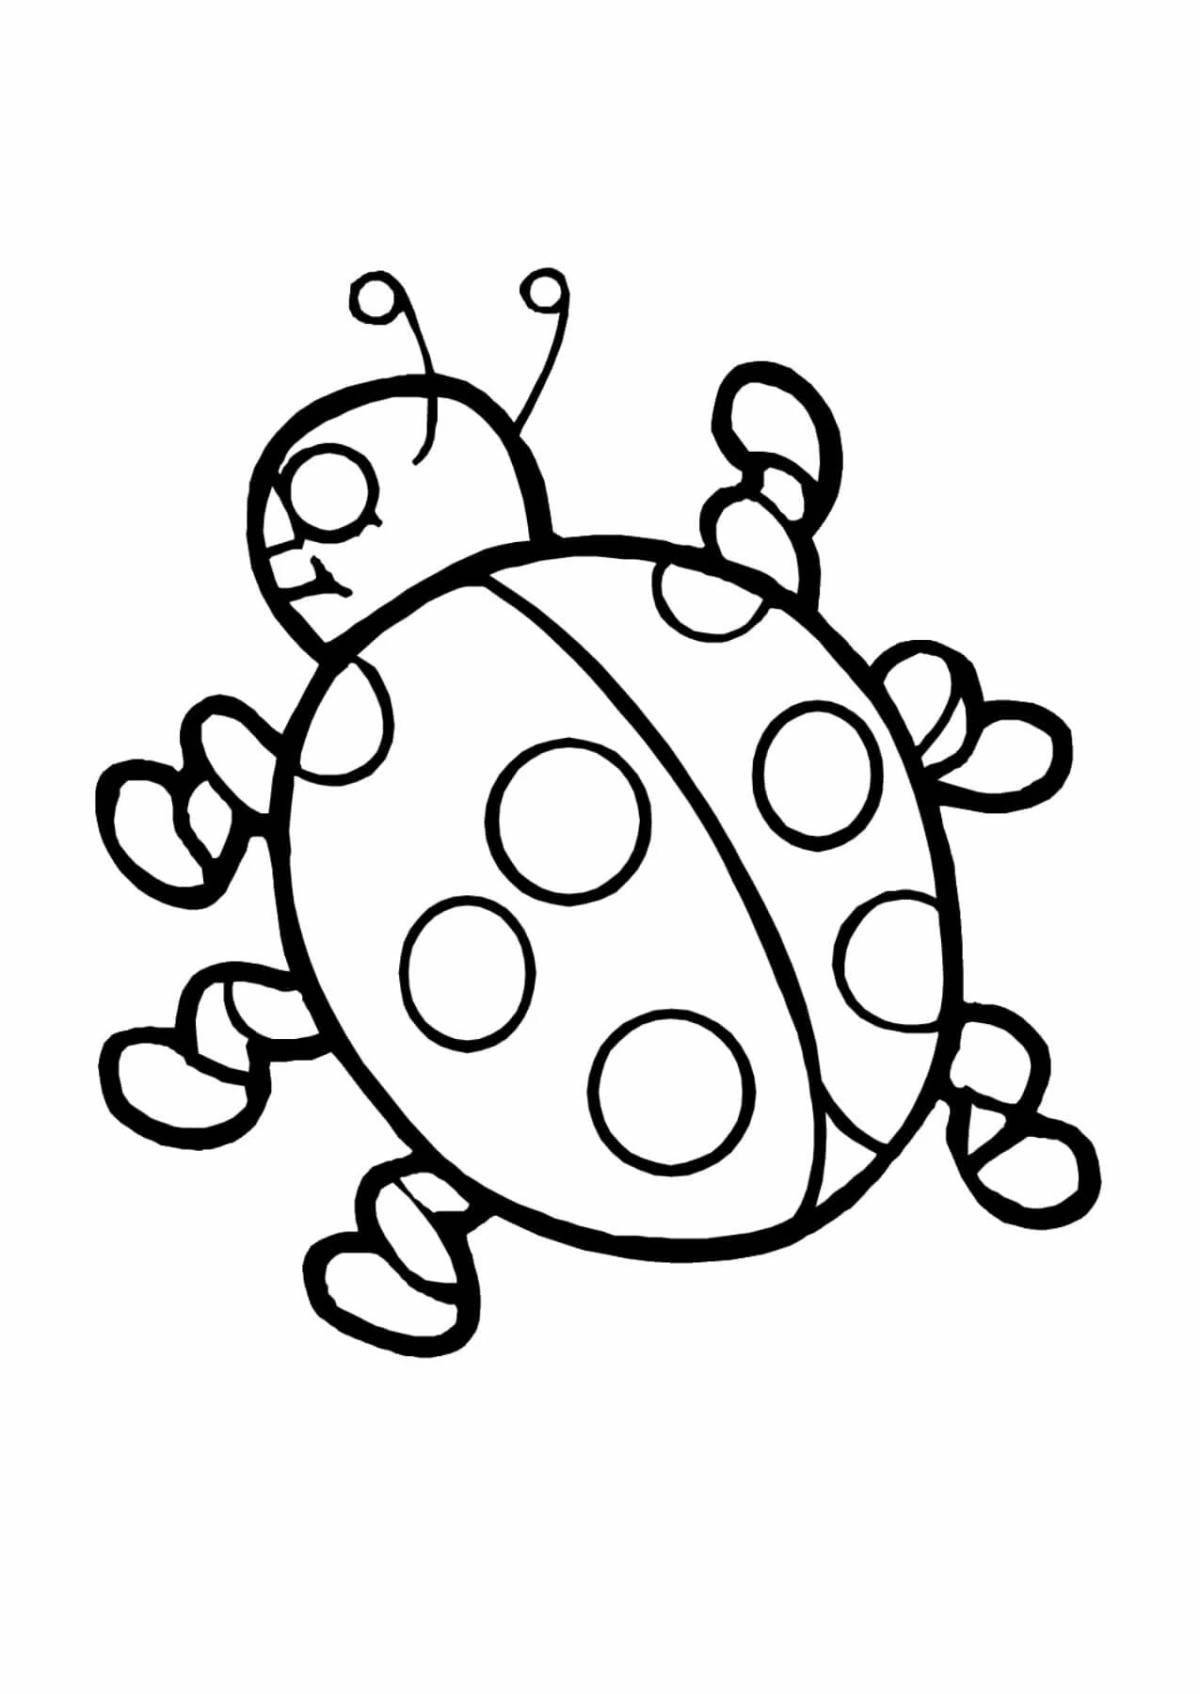 A whimsical drawing of a ladybug